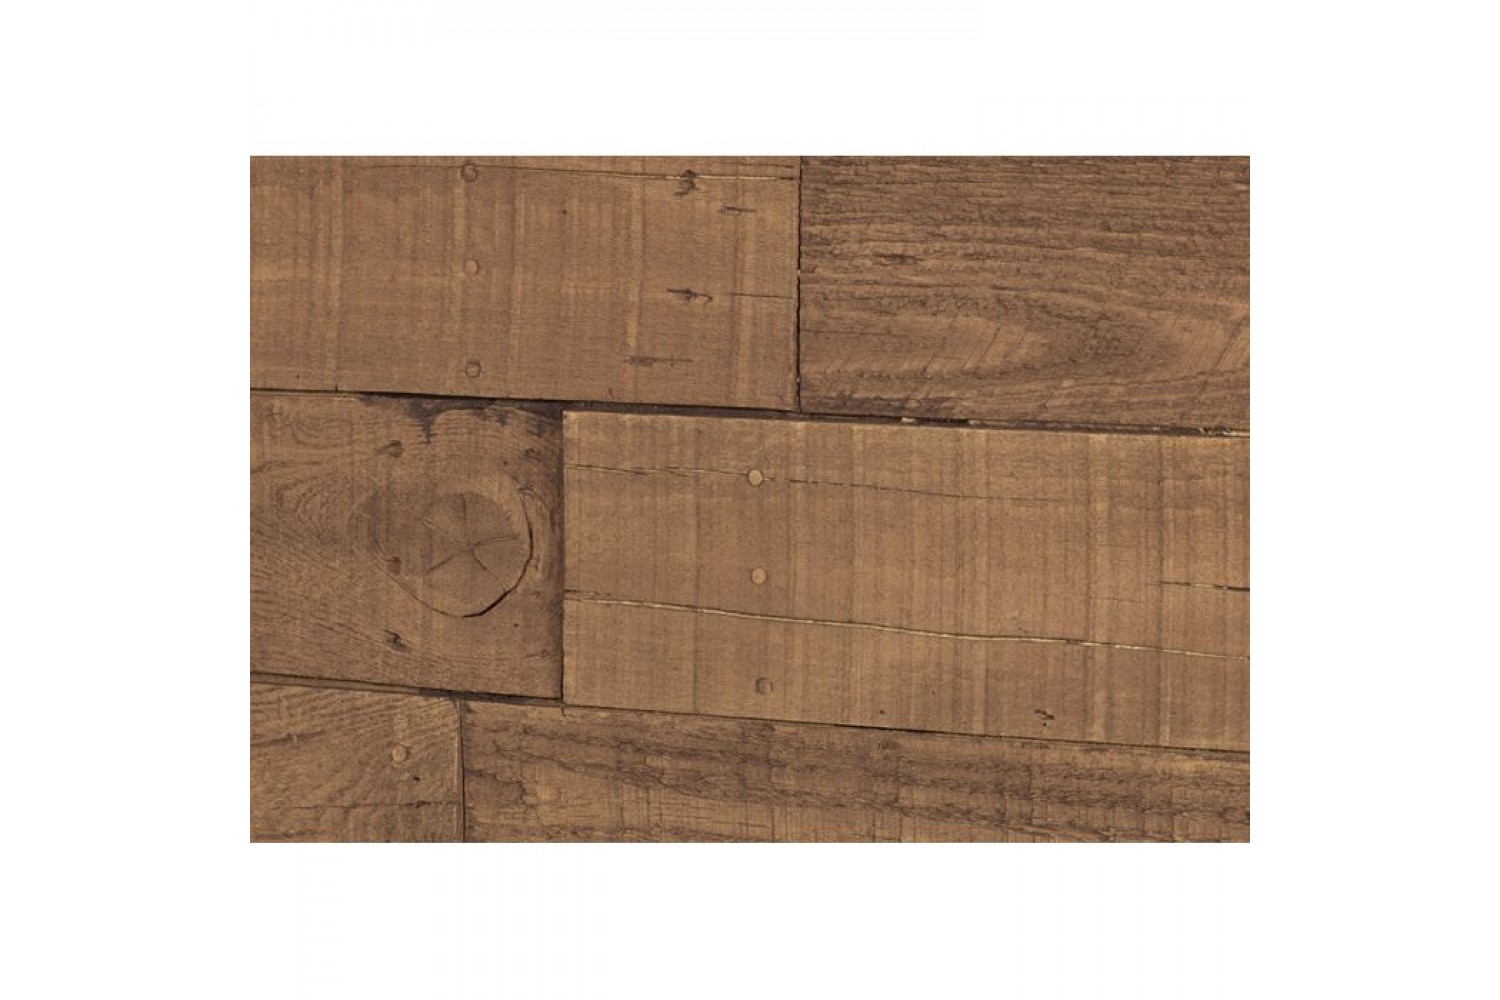 Pallet Deconstructed Cedar zoomed in view of wood grain